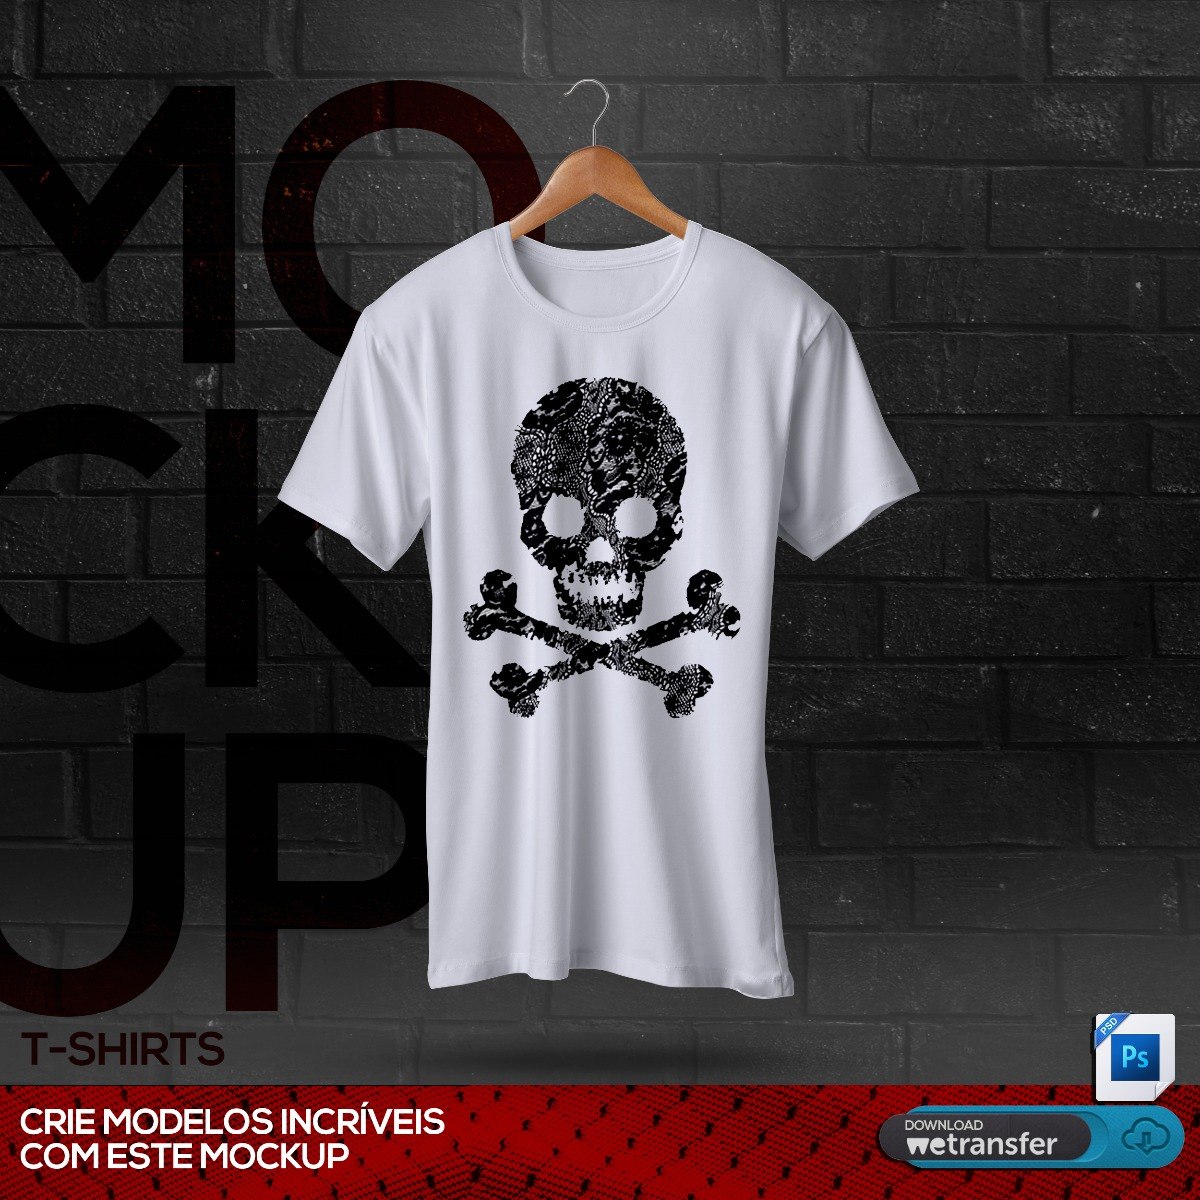 Download Mockup Camisa - Tshirt Mockup - R$ 19,99 em Mercado Livre